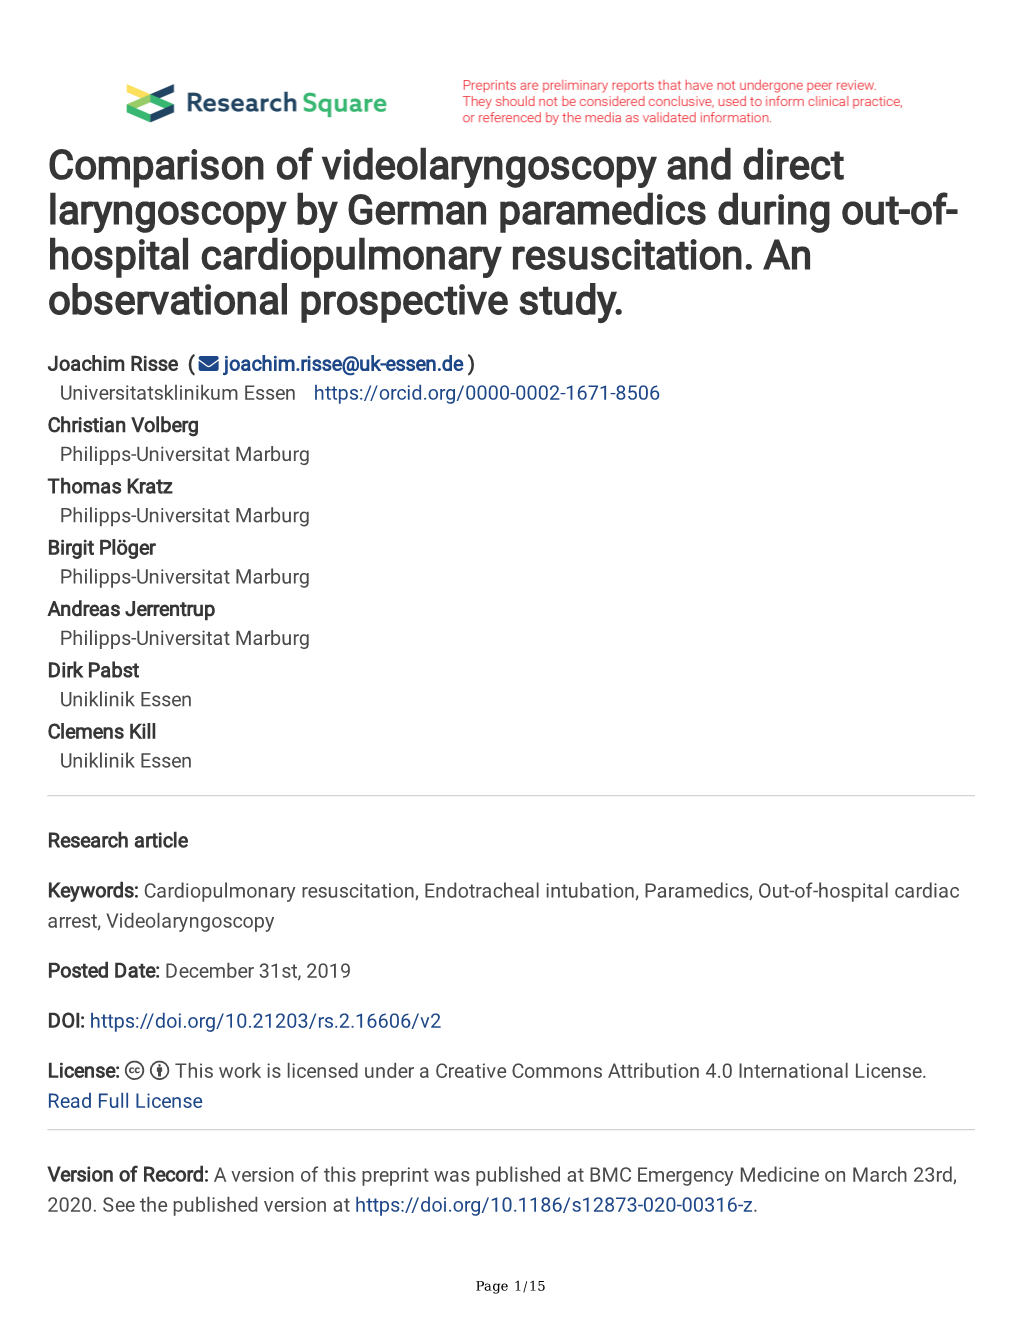 Comparison of Videolaryngoscopy and Direct Laryngoscopy by German Paramedics During Out-Of- Hospital Cardiopulmonary Resuscitation